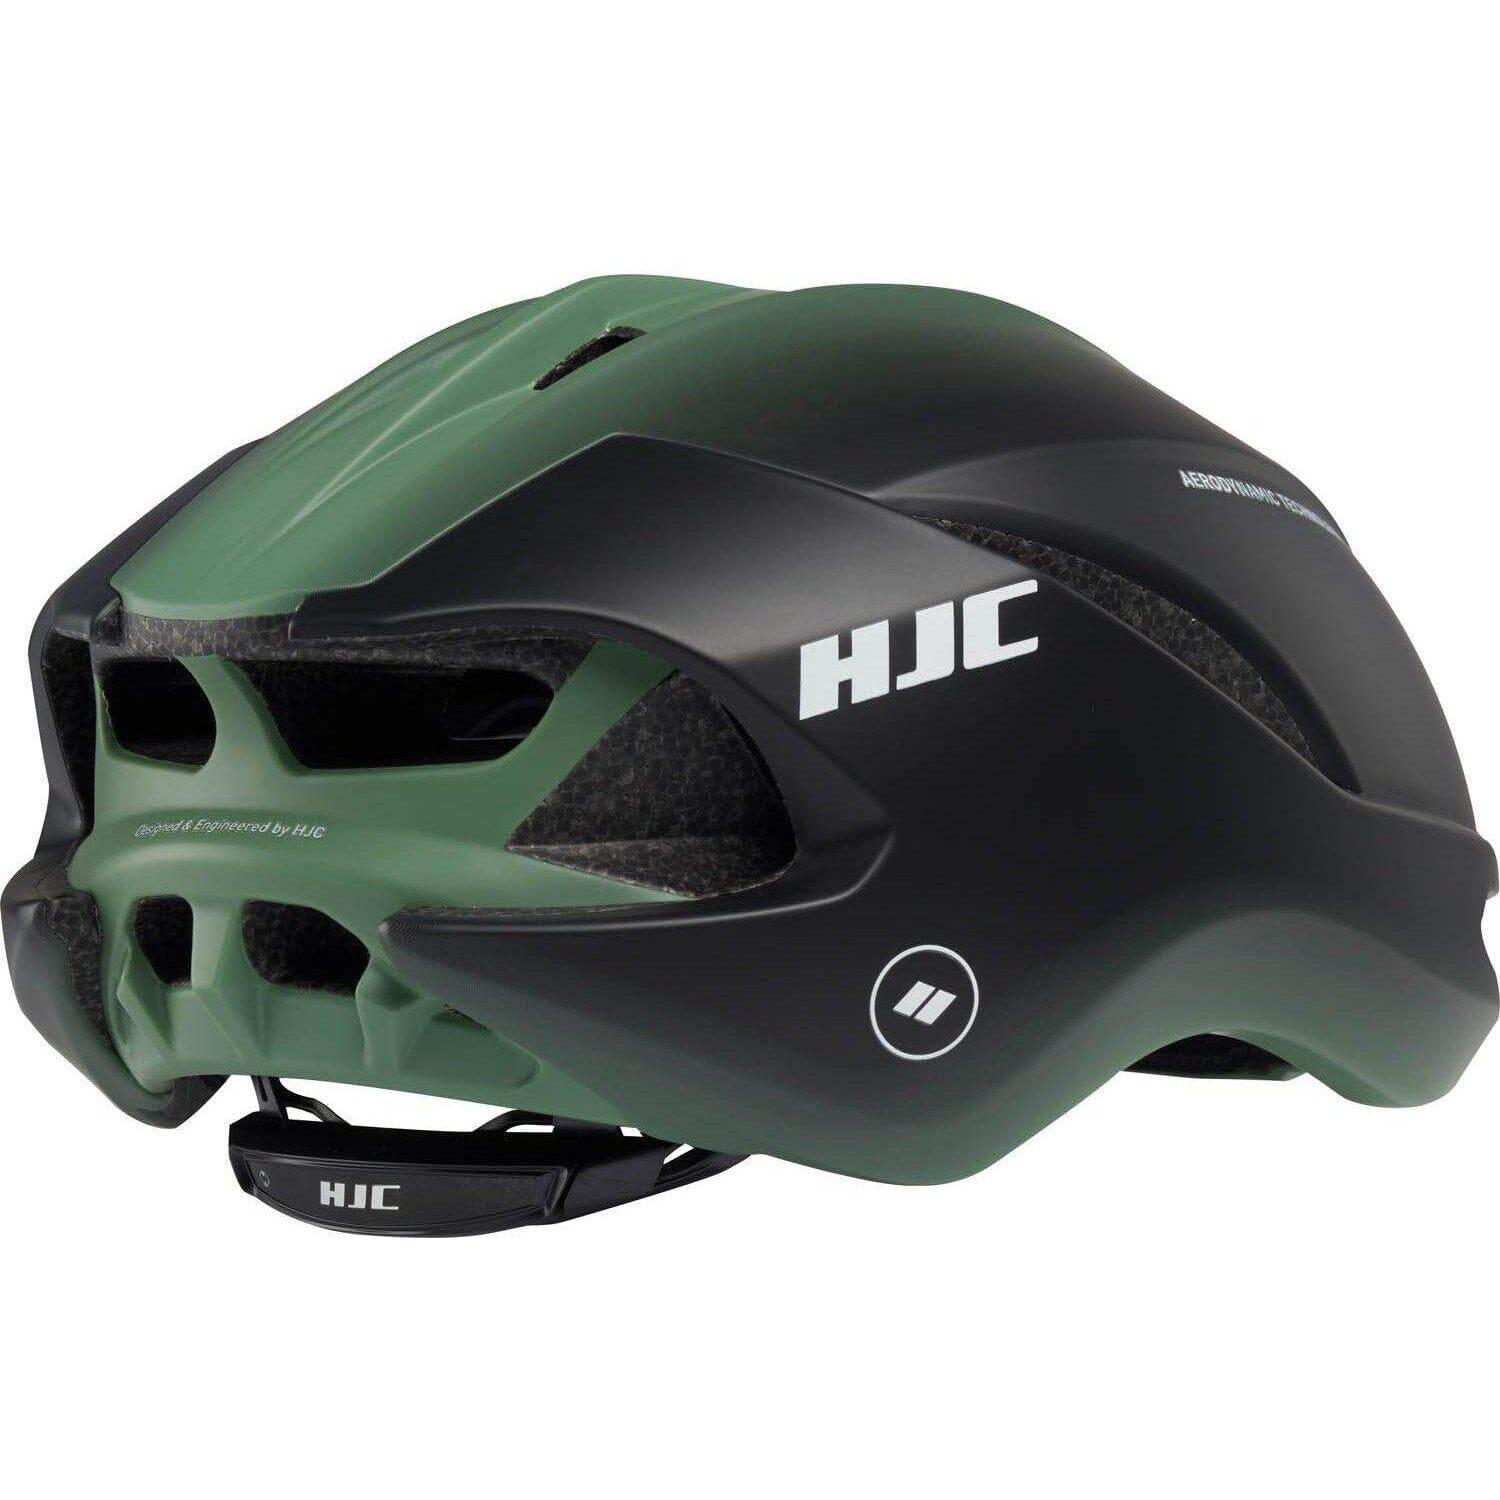 HJC Furion 2.0: Light, Aero, High-Performance Cycling Helmet 4/6